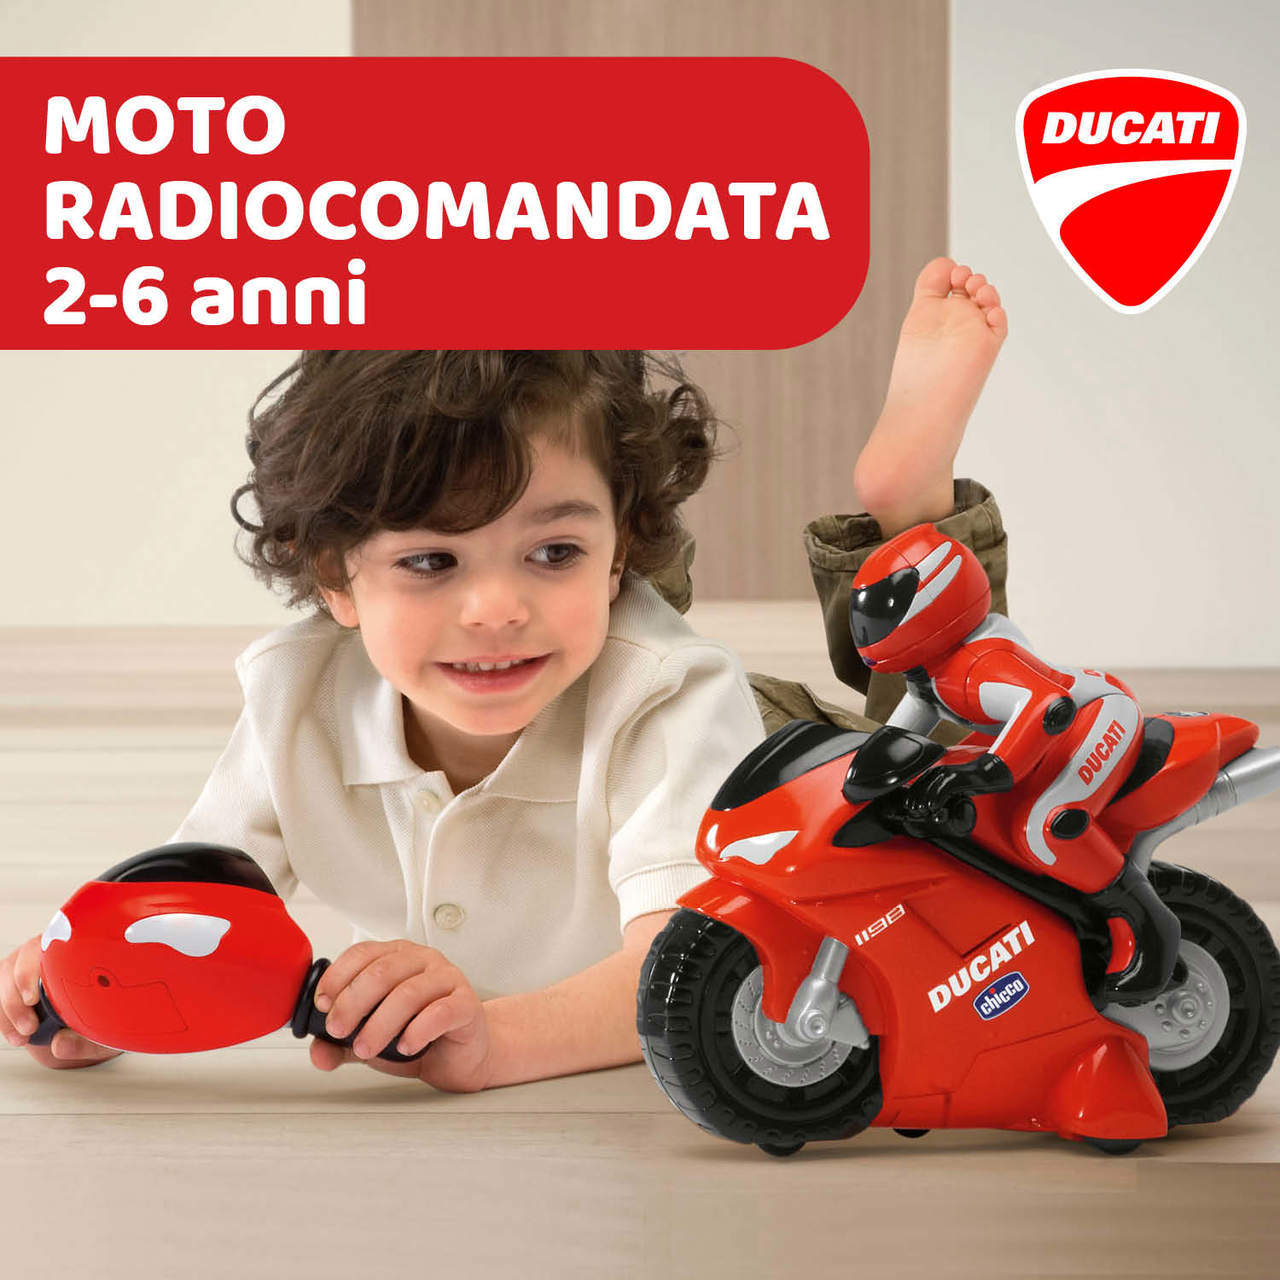 Ducati 1198 Rc image number 11